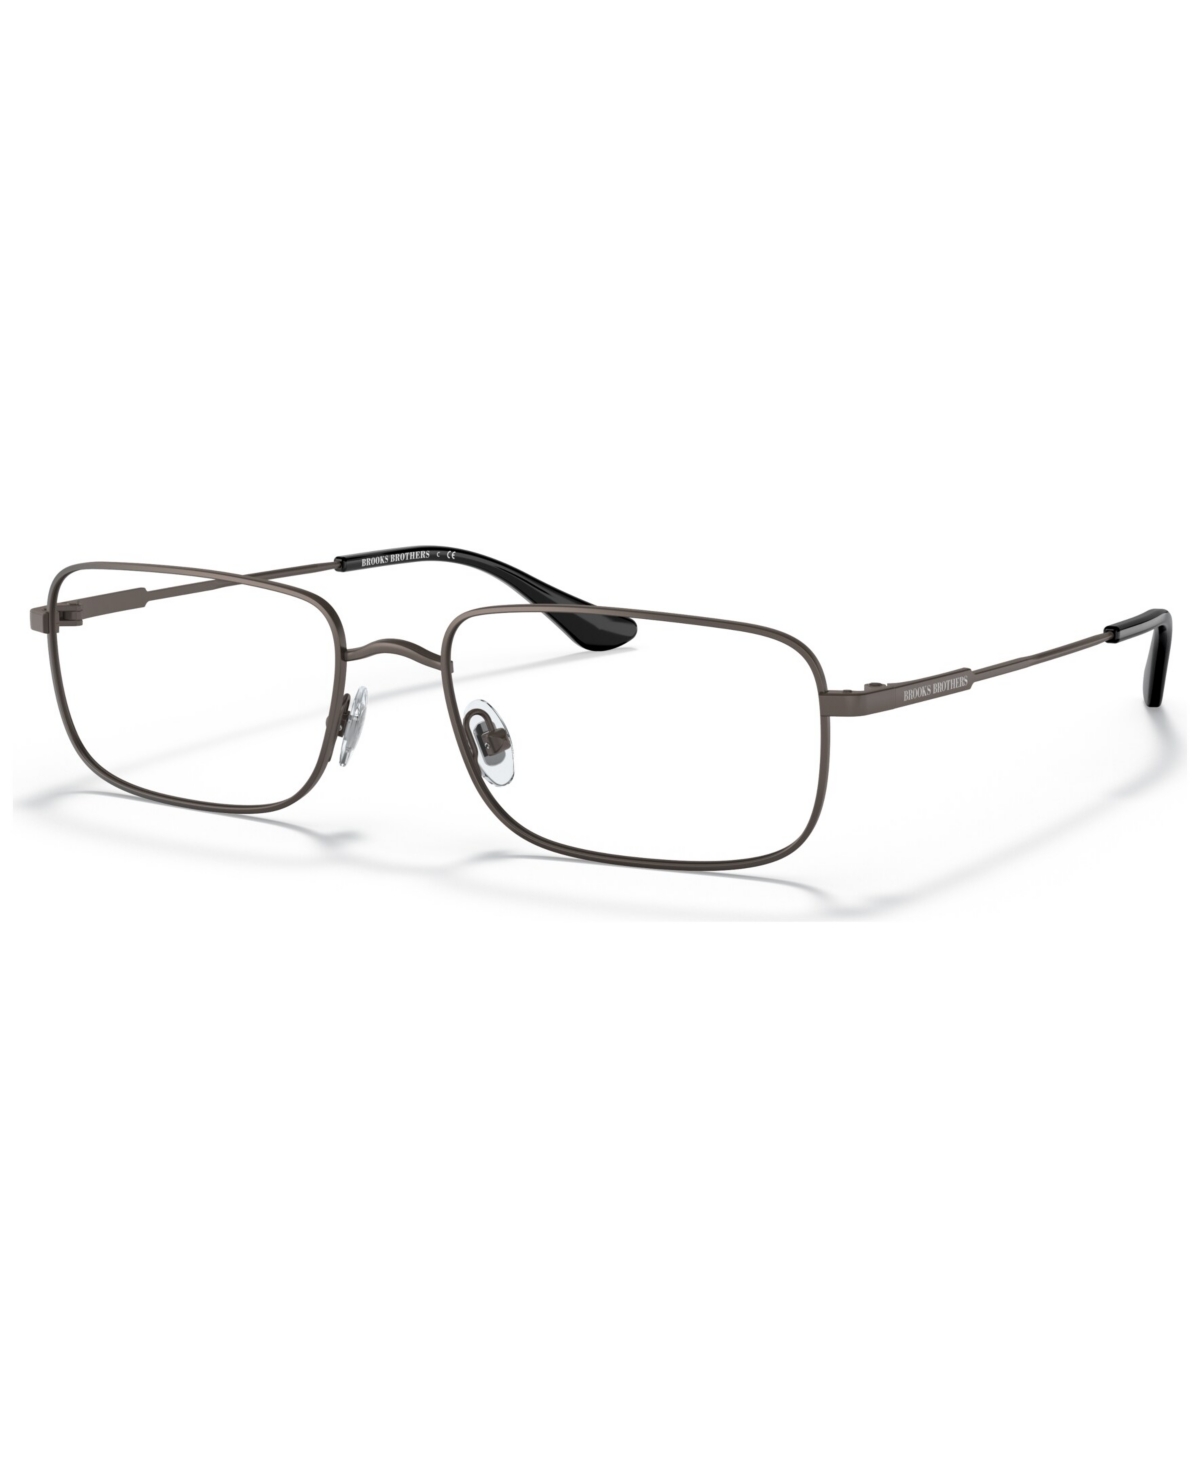 Men's Rectangle Eyeglasses, BB109857-o - Matte Gunmetal